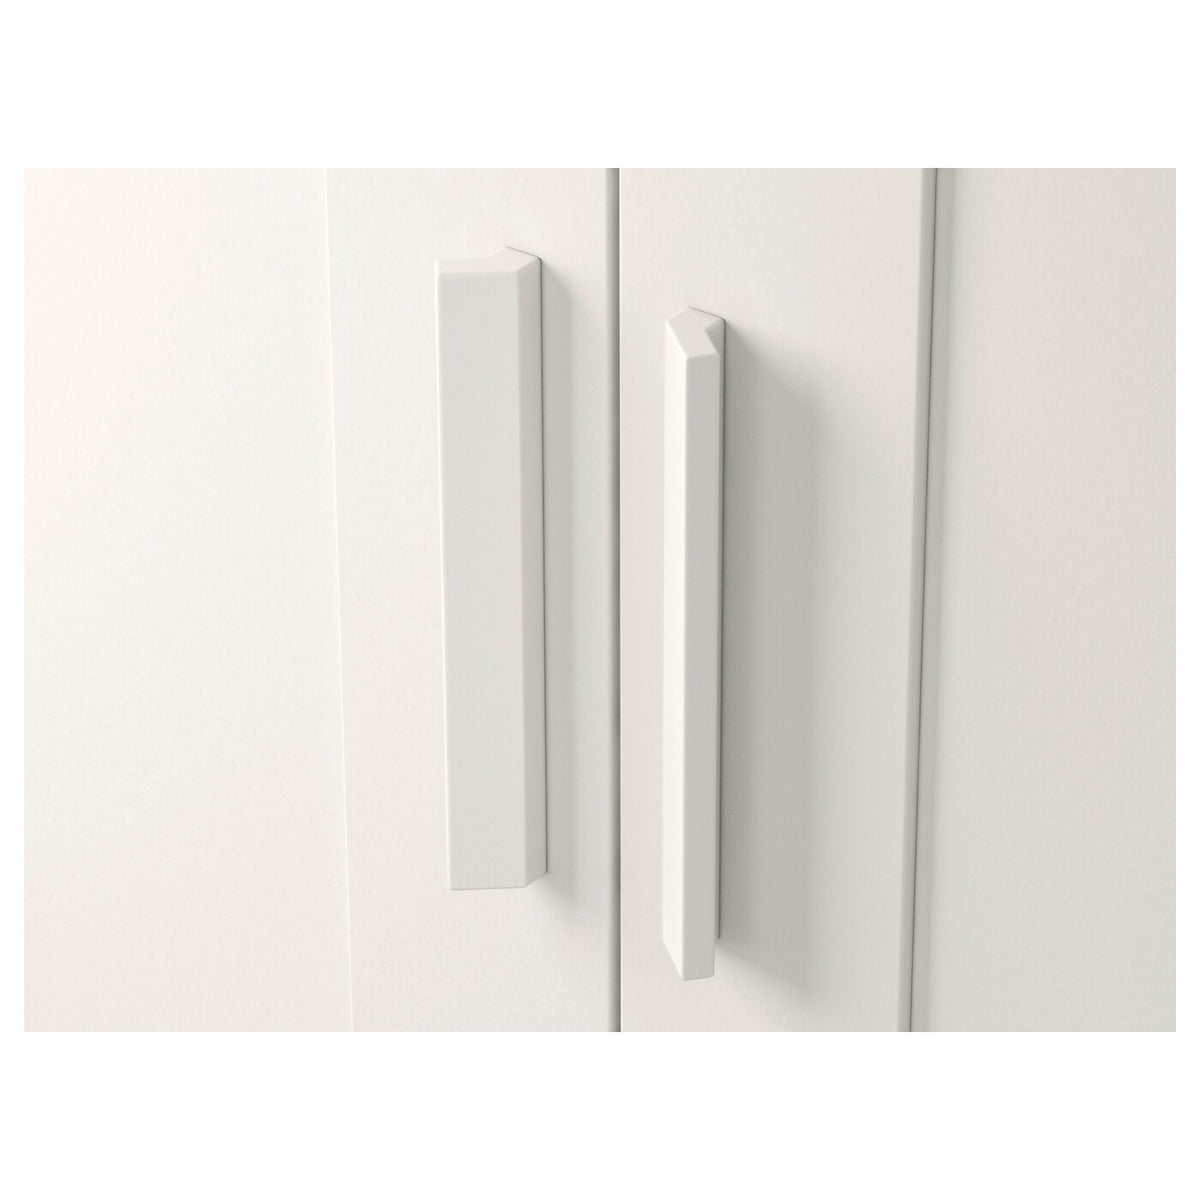 IKEA BRIMNES Wardrobe with 3 doors, white, 117x190 cm